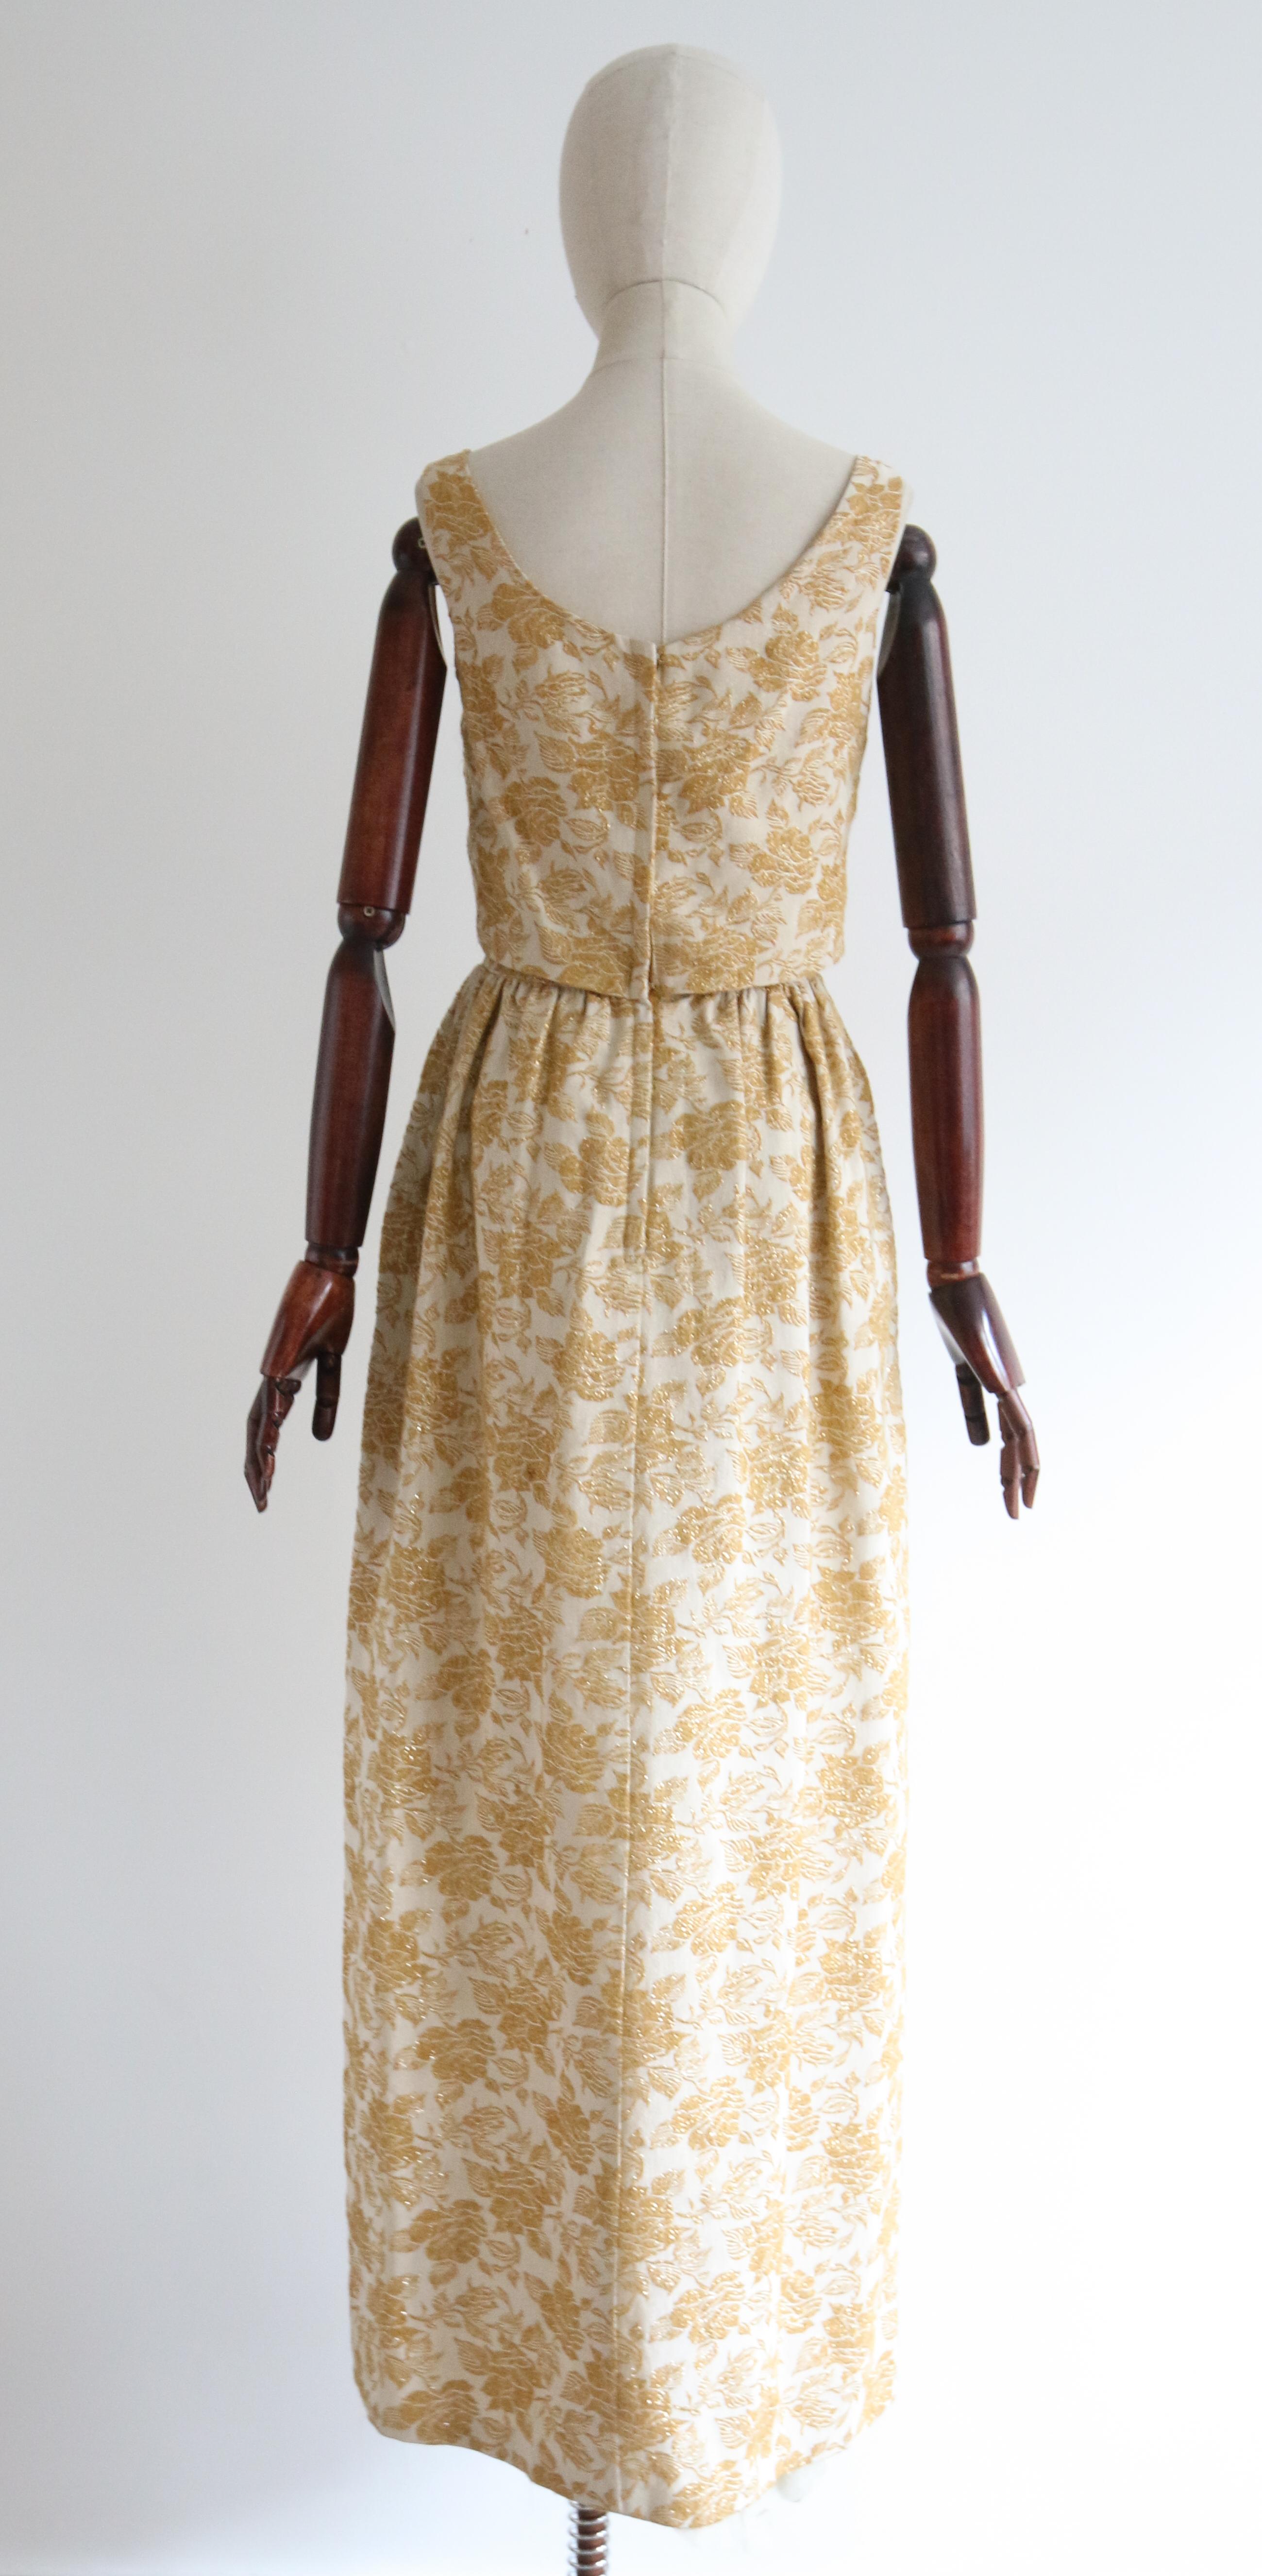  Vintage 1960's Gold Lurex Brocade & Rhinestone Evening Gown UK 8 US 4 For Sale 4